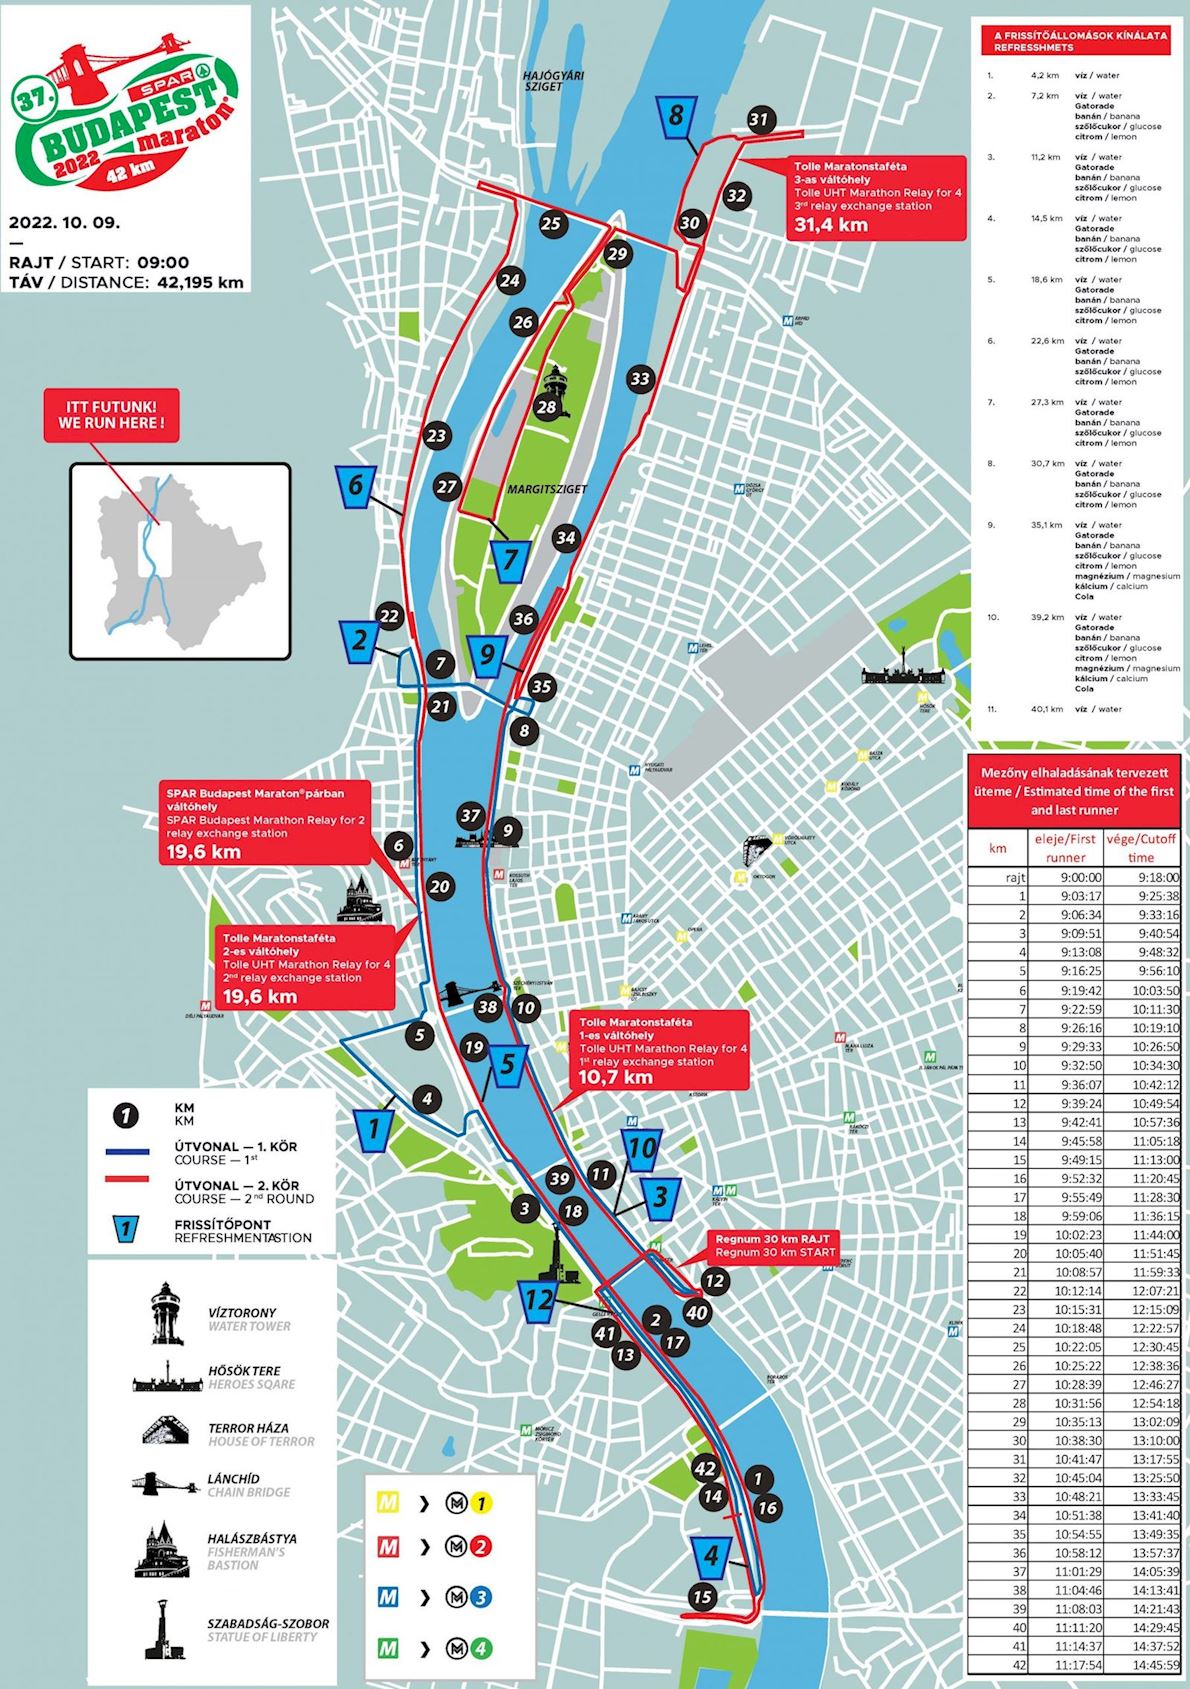 SPAR Budapest Marathon MAPA DEL RECORRIDO DE